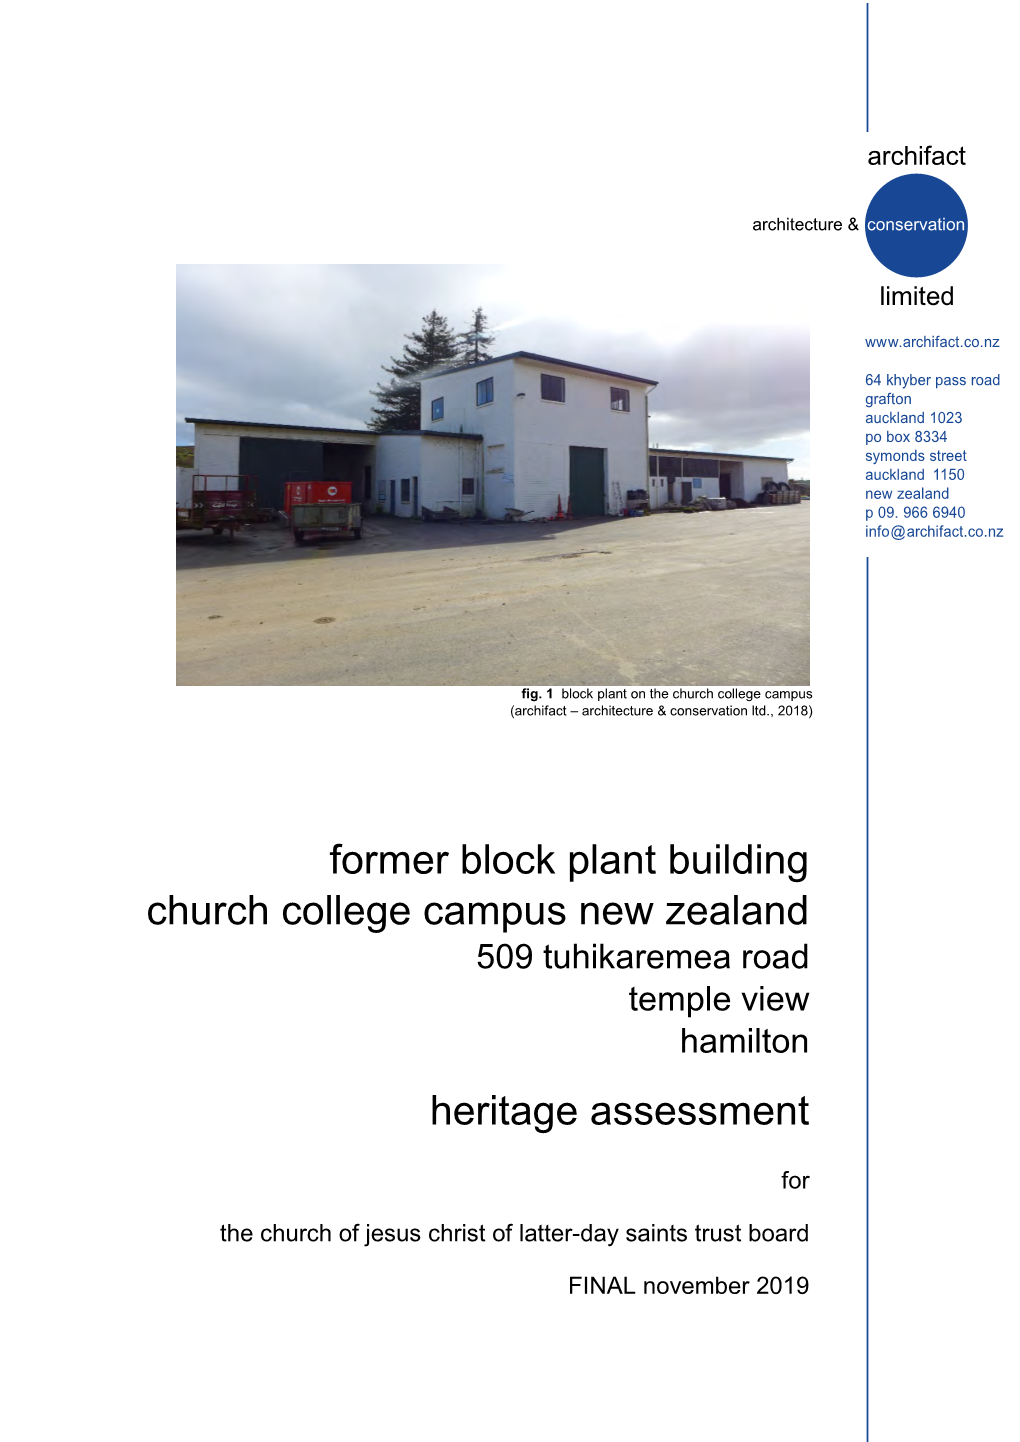 Former Block Plant Building Church College Campus New Zealand 509 Tuhikaremea Road Temple View Hamilton